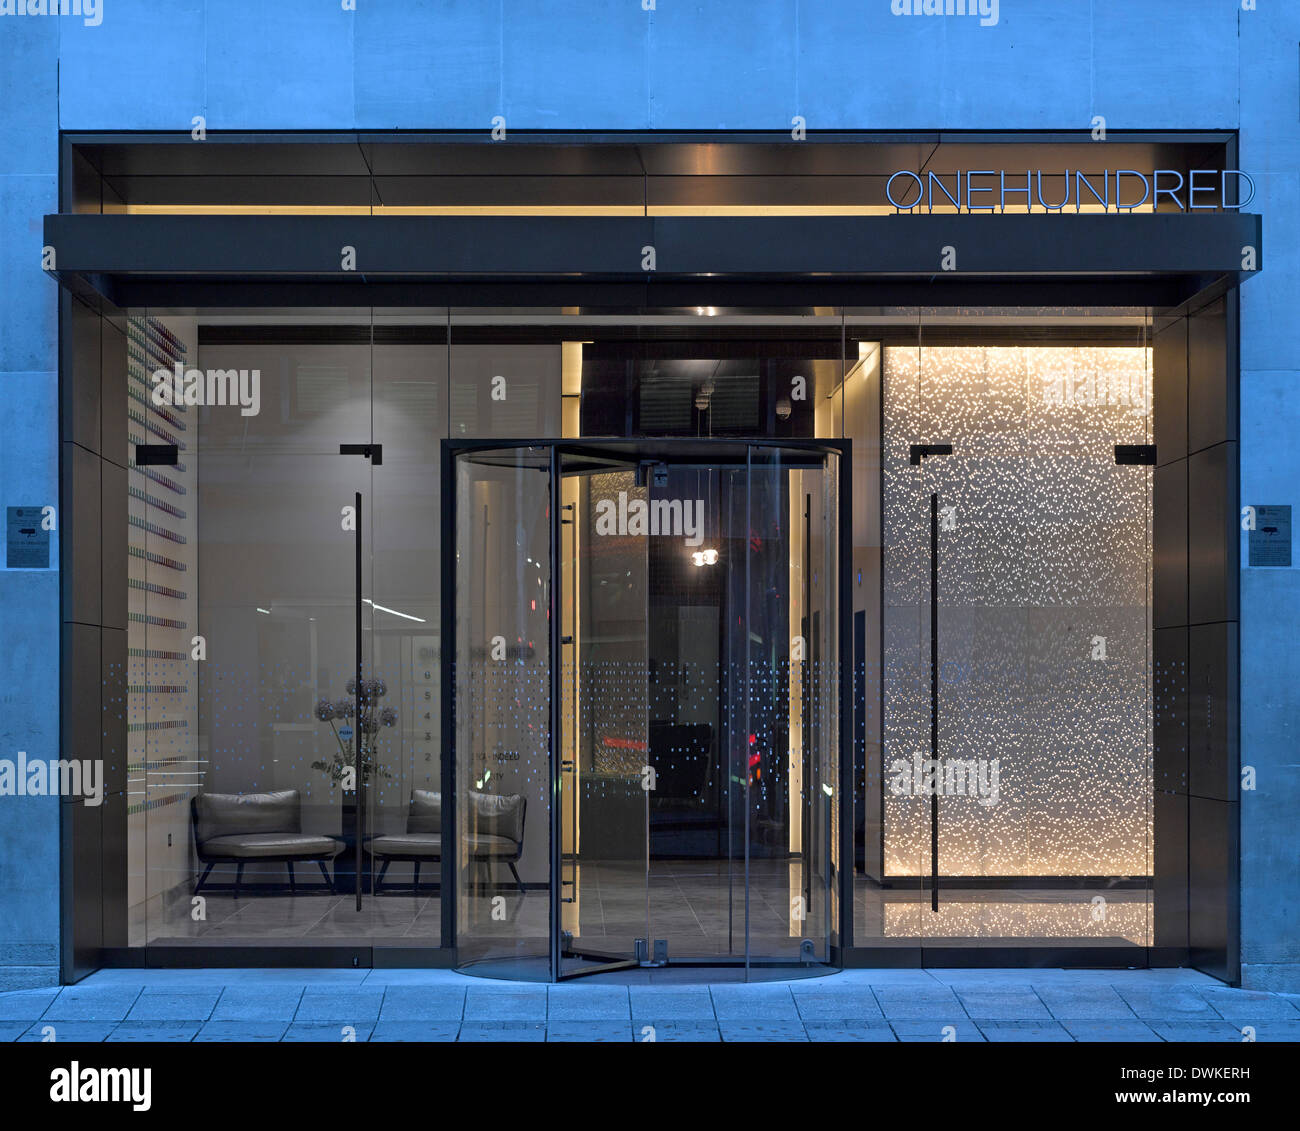 Hundert New Oxford Street, London, Großbritannien. Architekt: Morey Smith, 2013. Abenddämmerung Blick in Empfang. Stockfoto